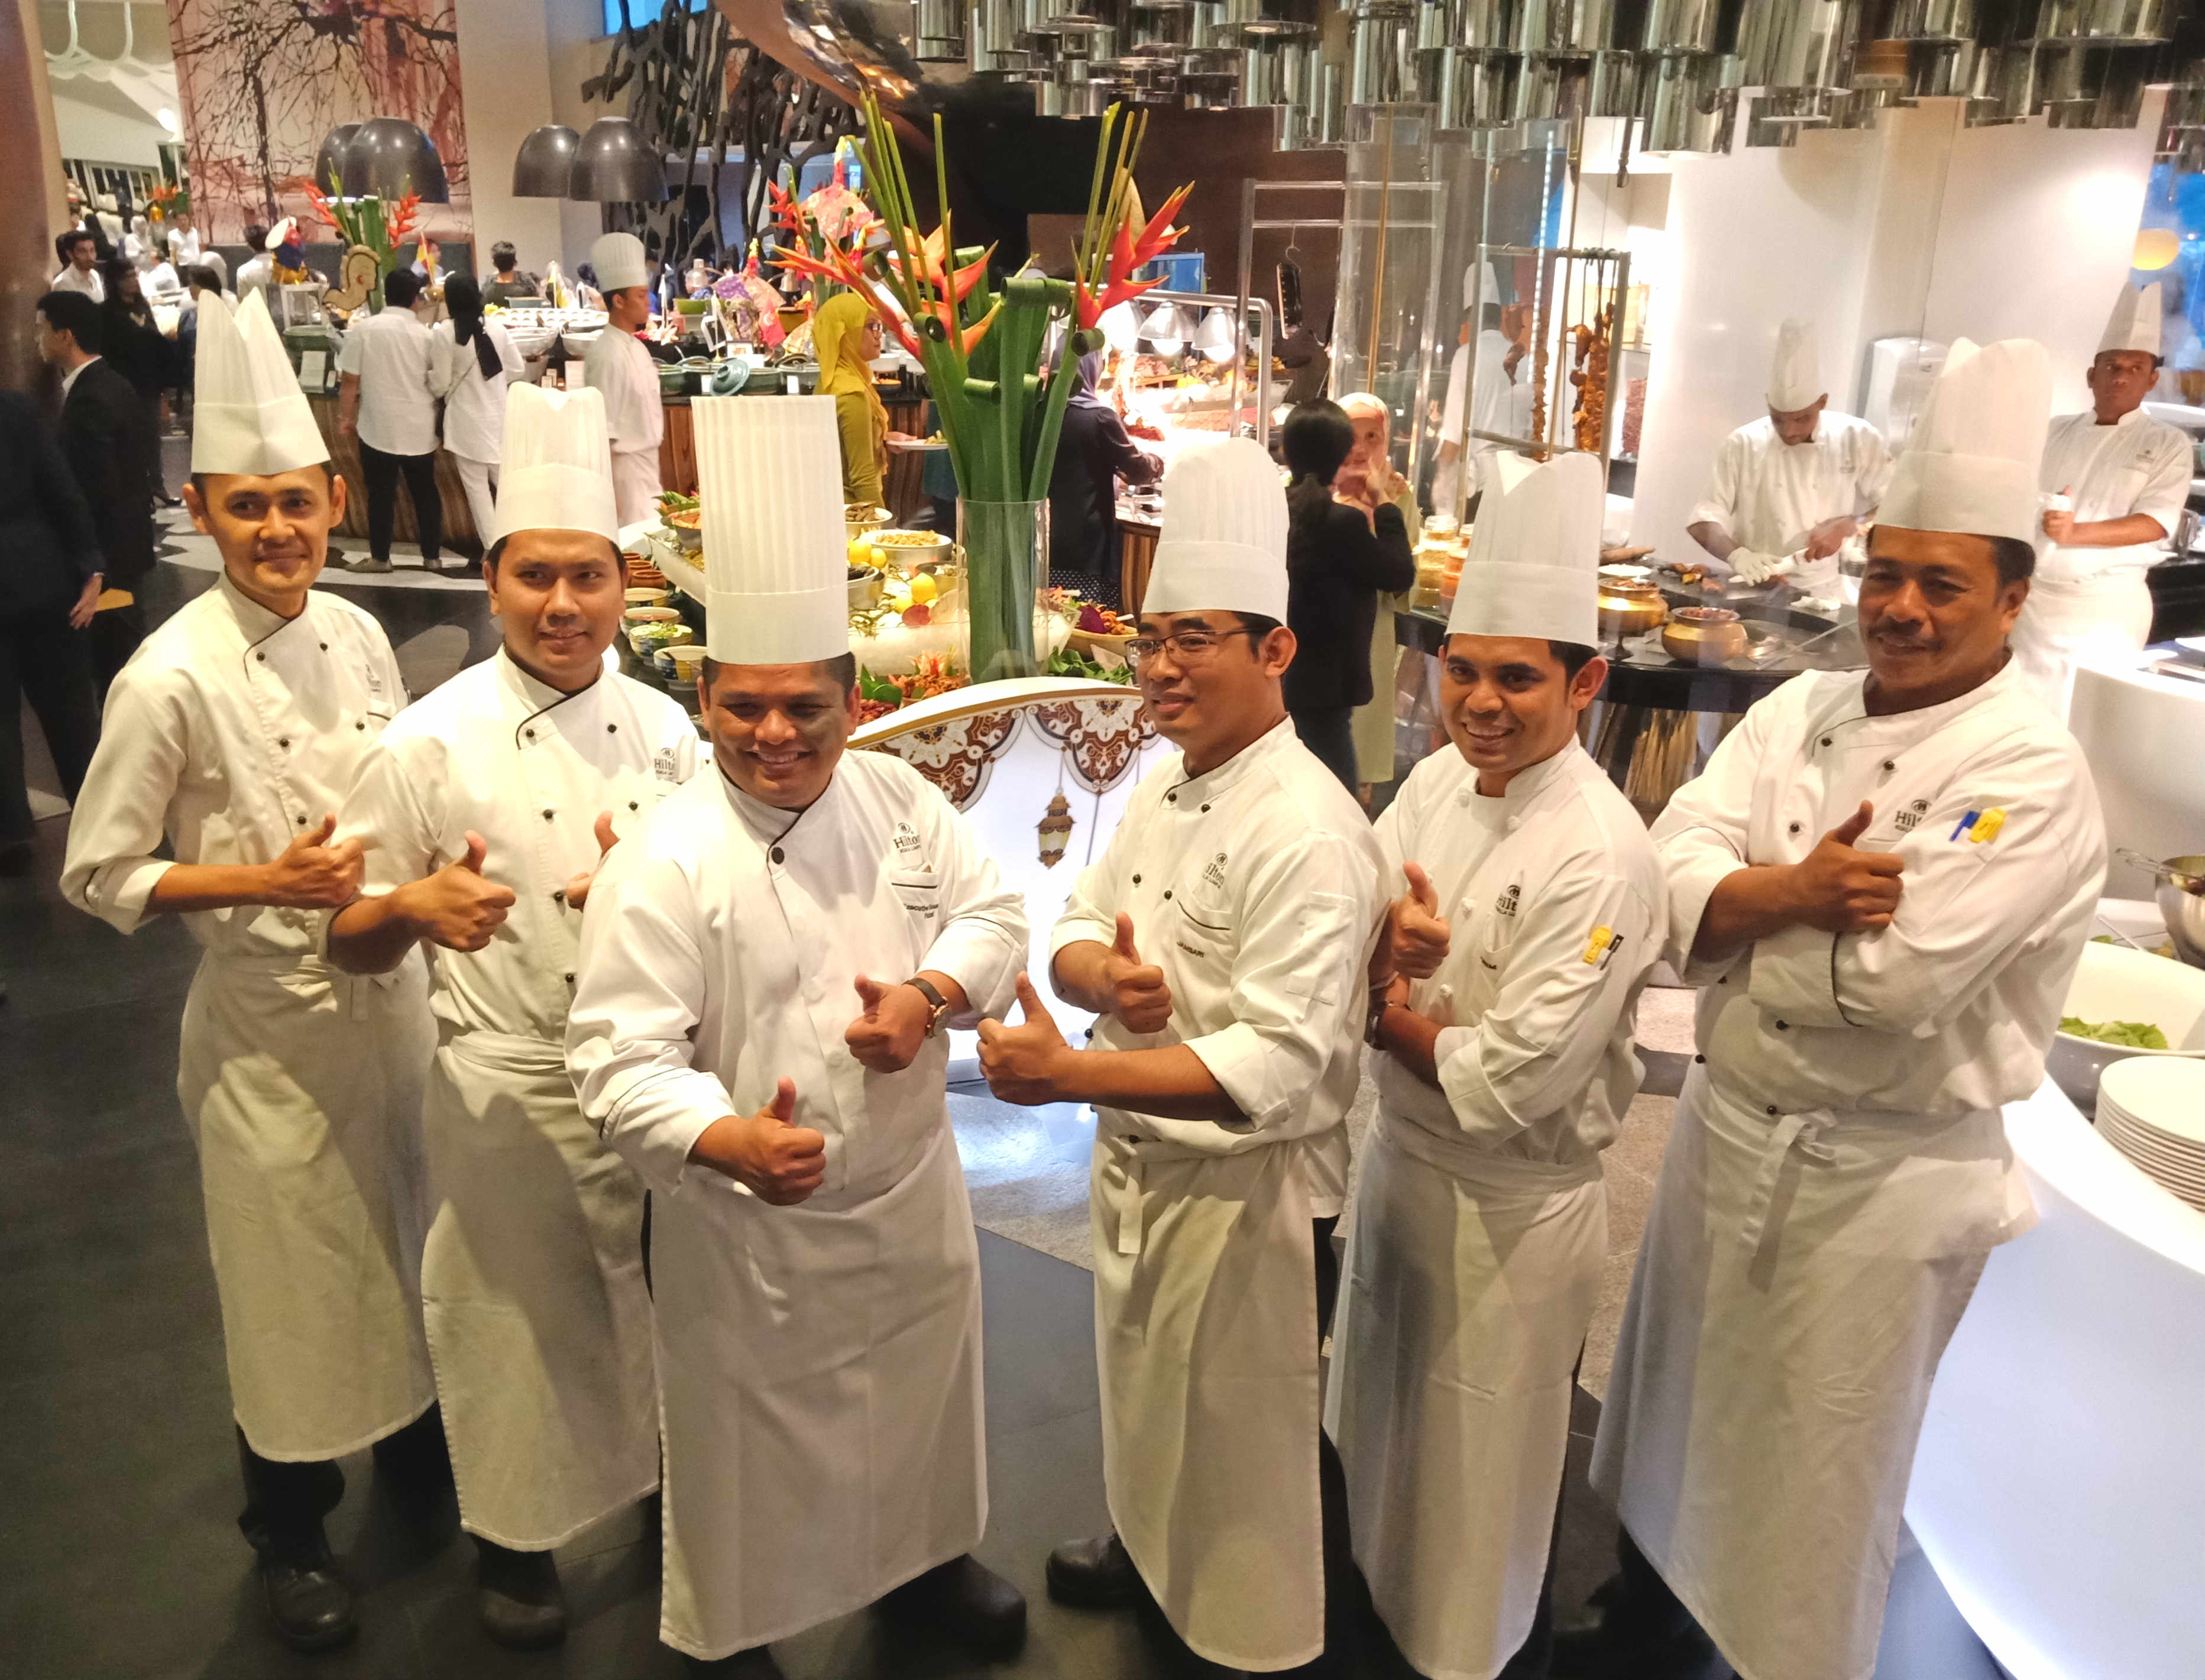 Barisan Chef Hilton Kuala Lumpur